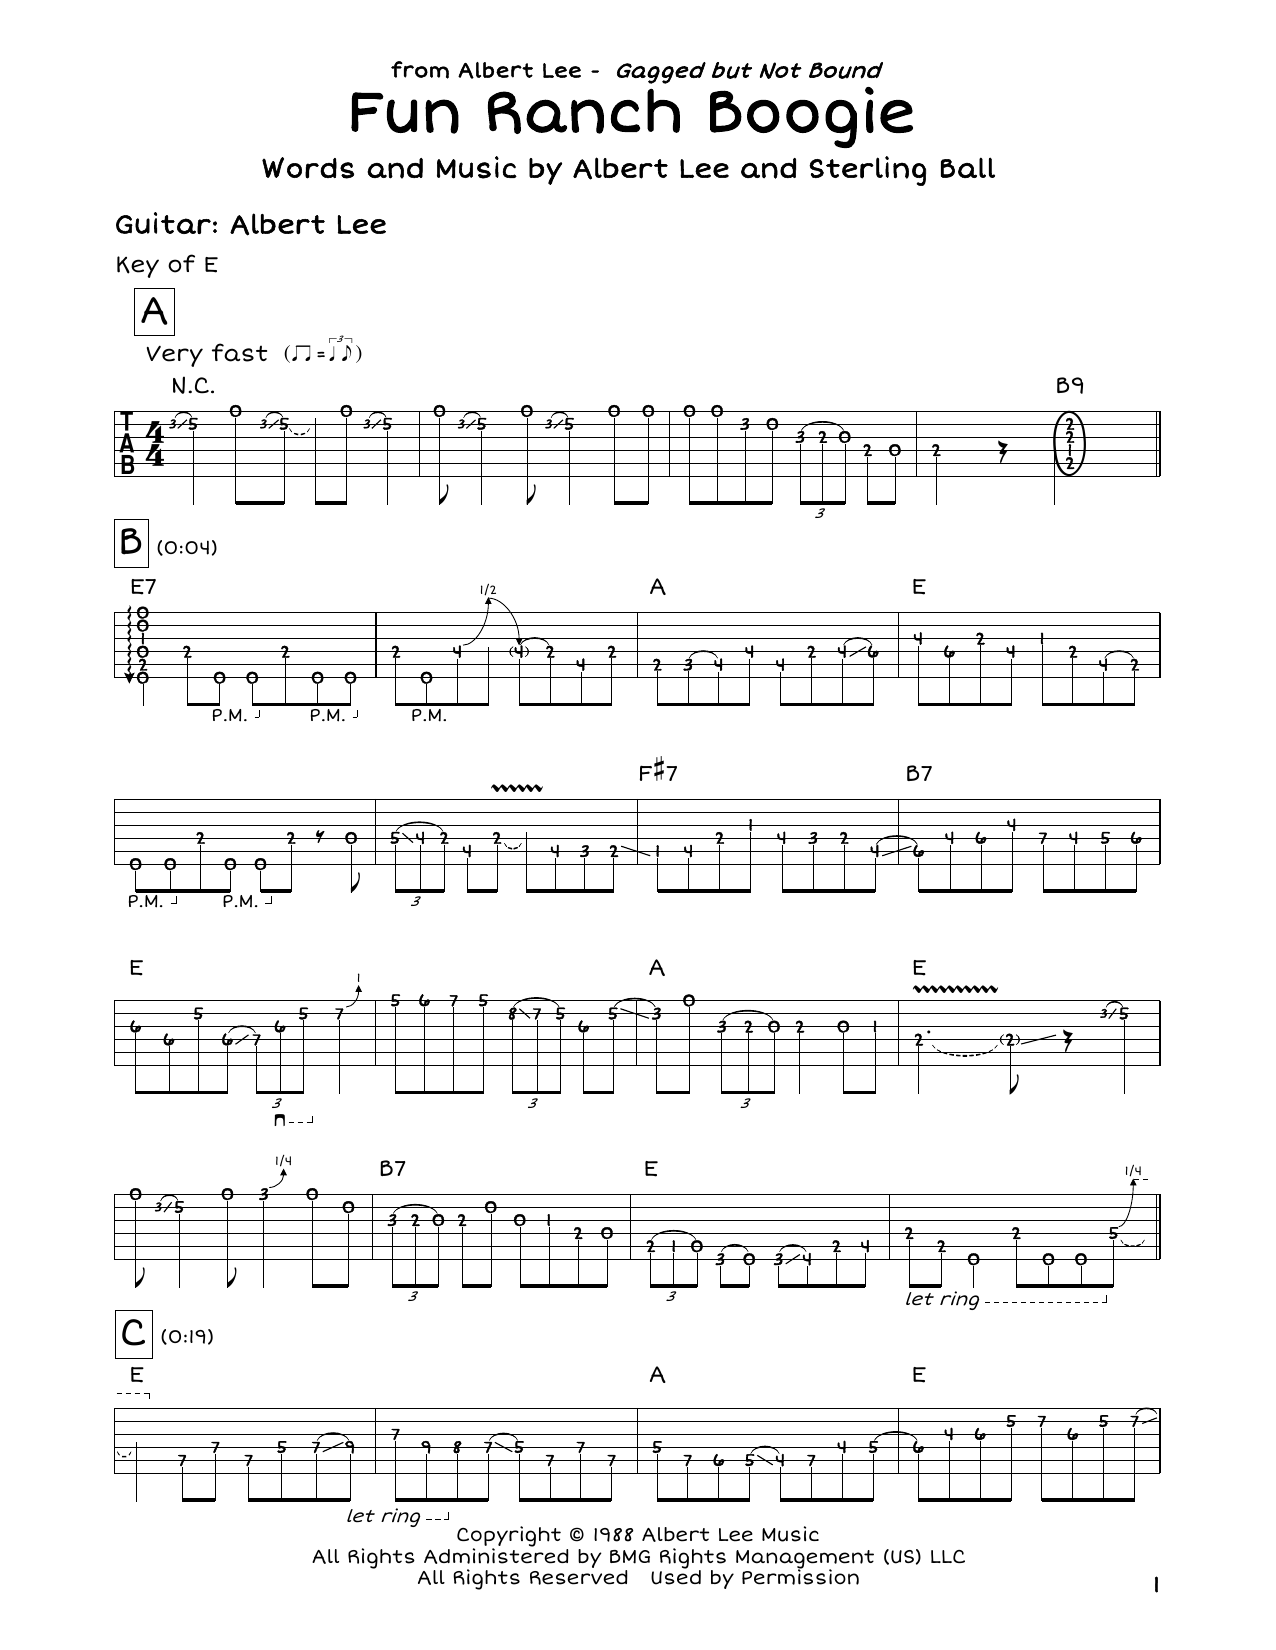 Albert Lee Fun Ranch Boogie Sheet Music Notes & Chords for Guitar Tab - Download or Print PDF